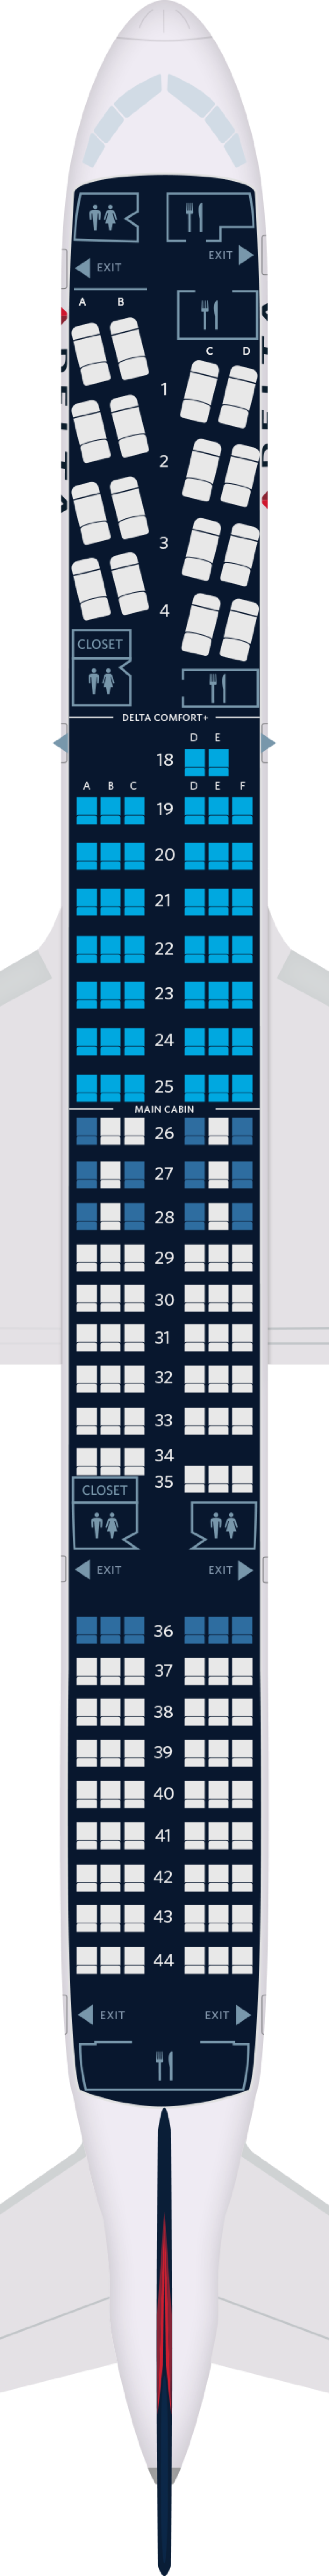 Boeing 757 200 Delta Seating Plan | Brokeasshome.com